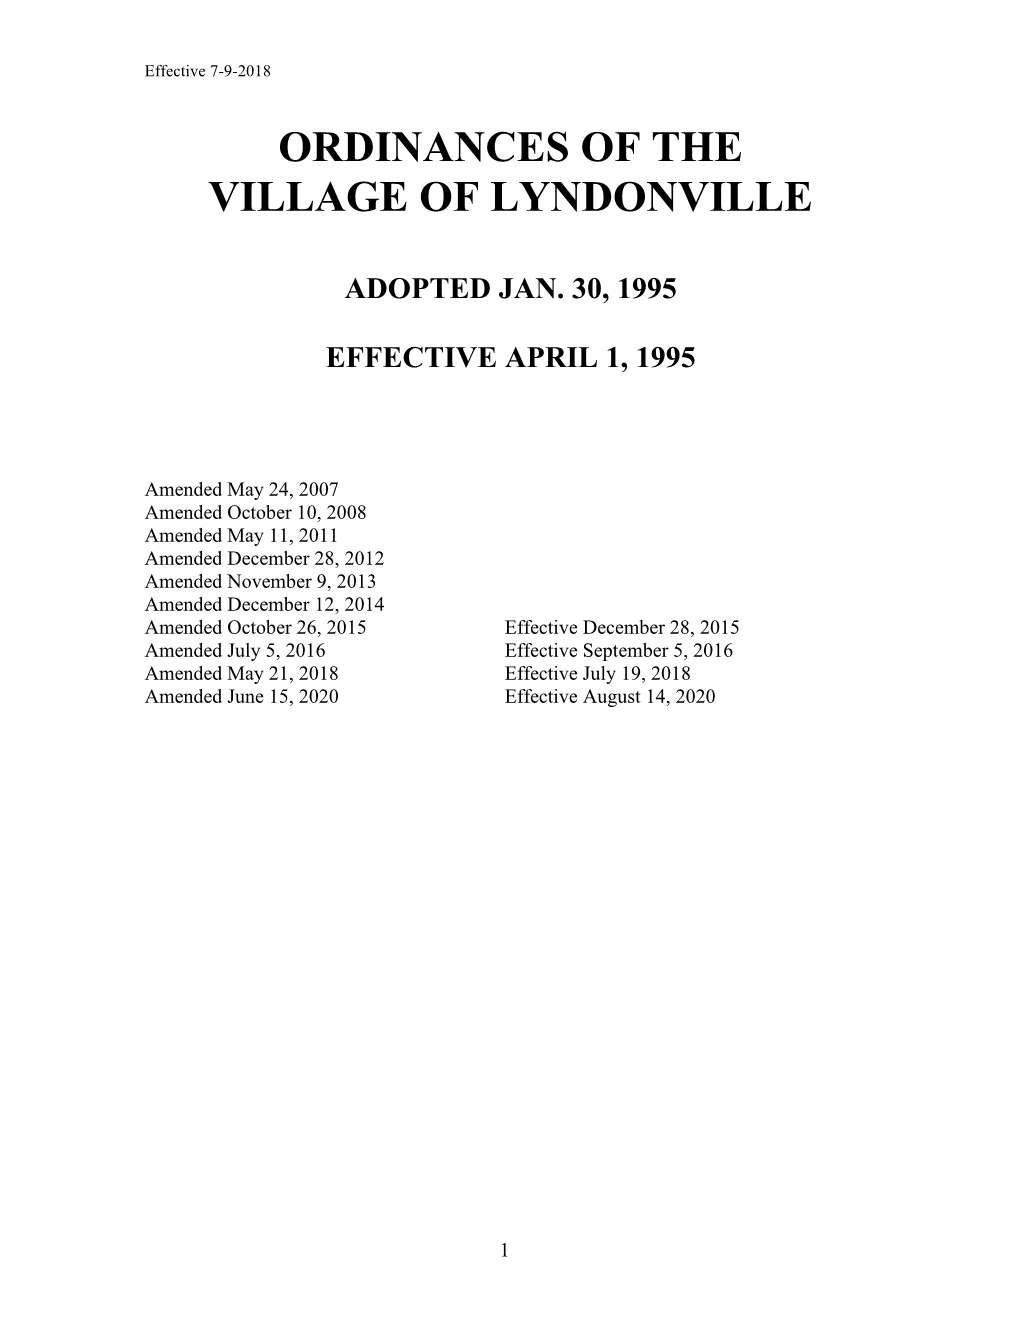 Village of Lyndonville Ordinances